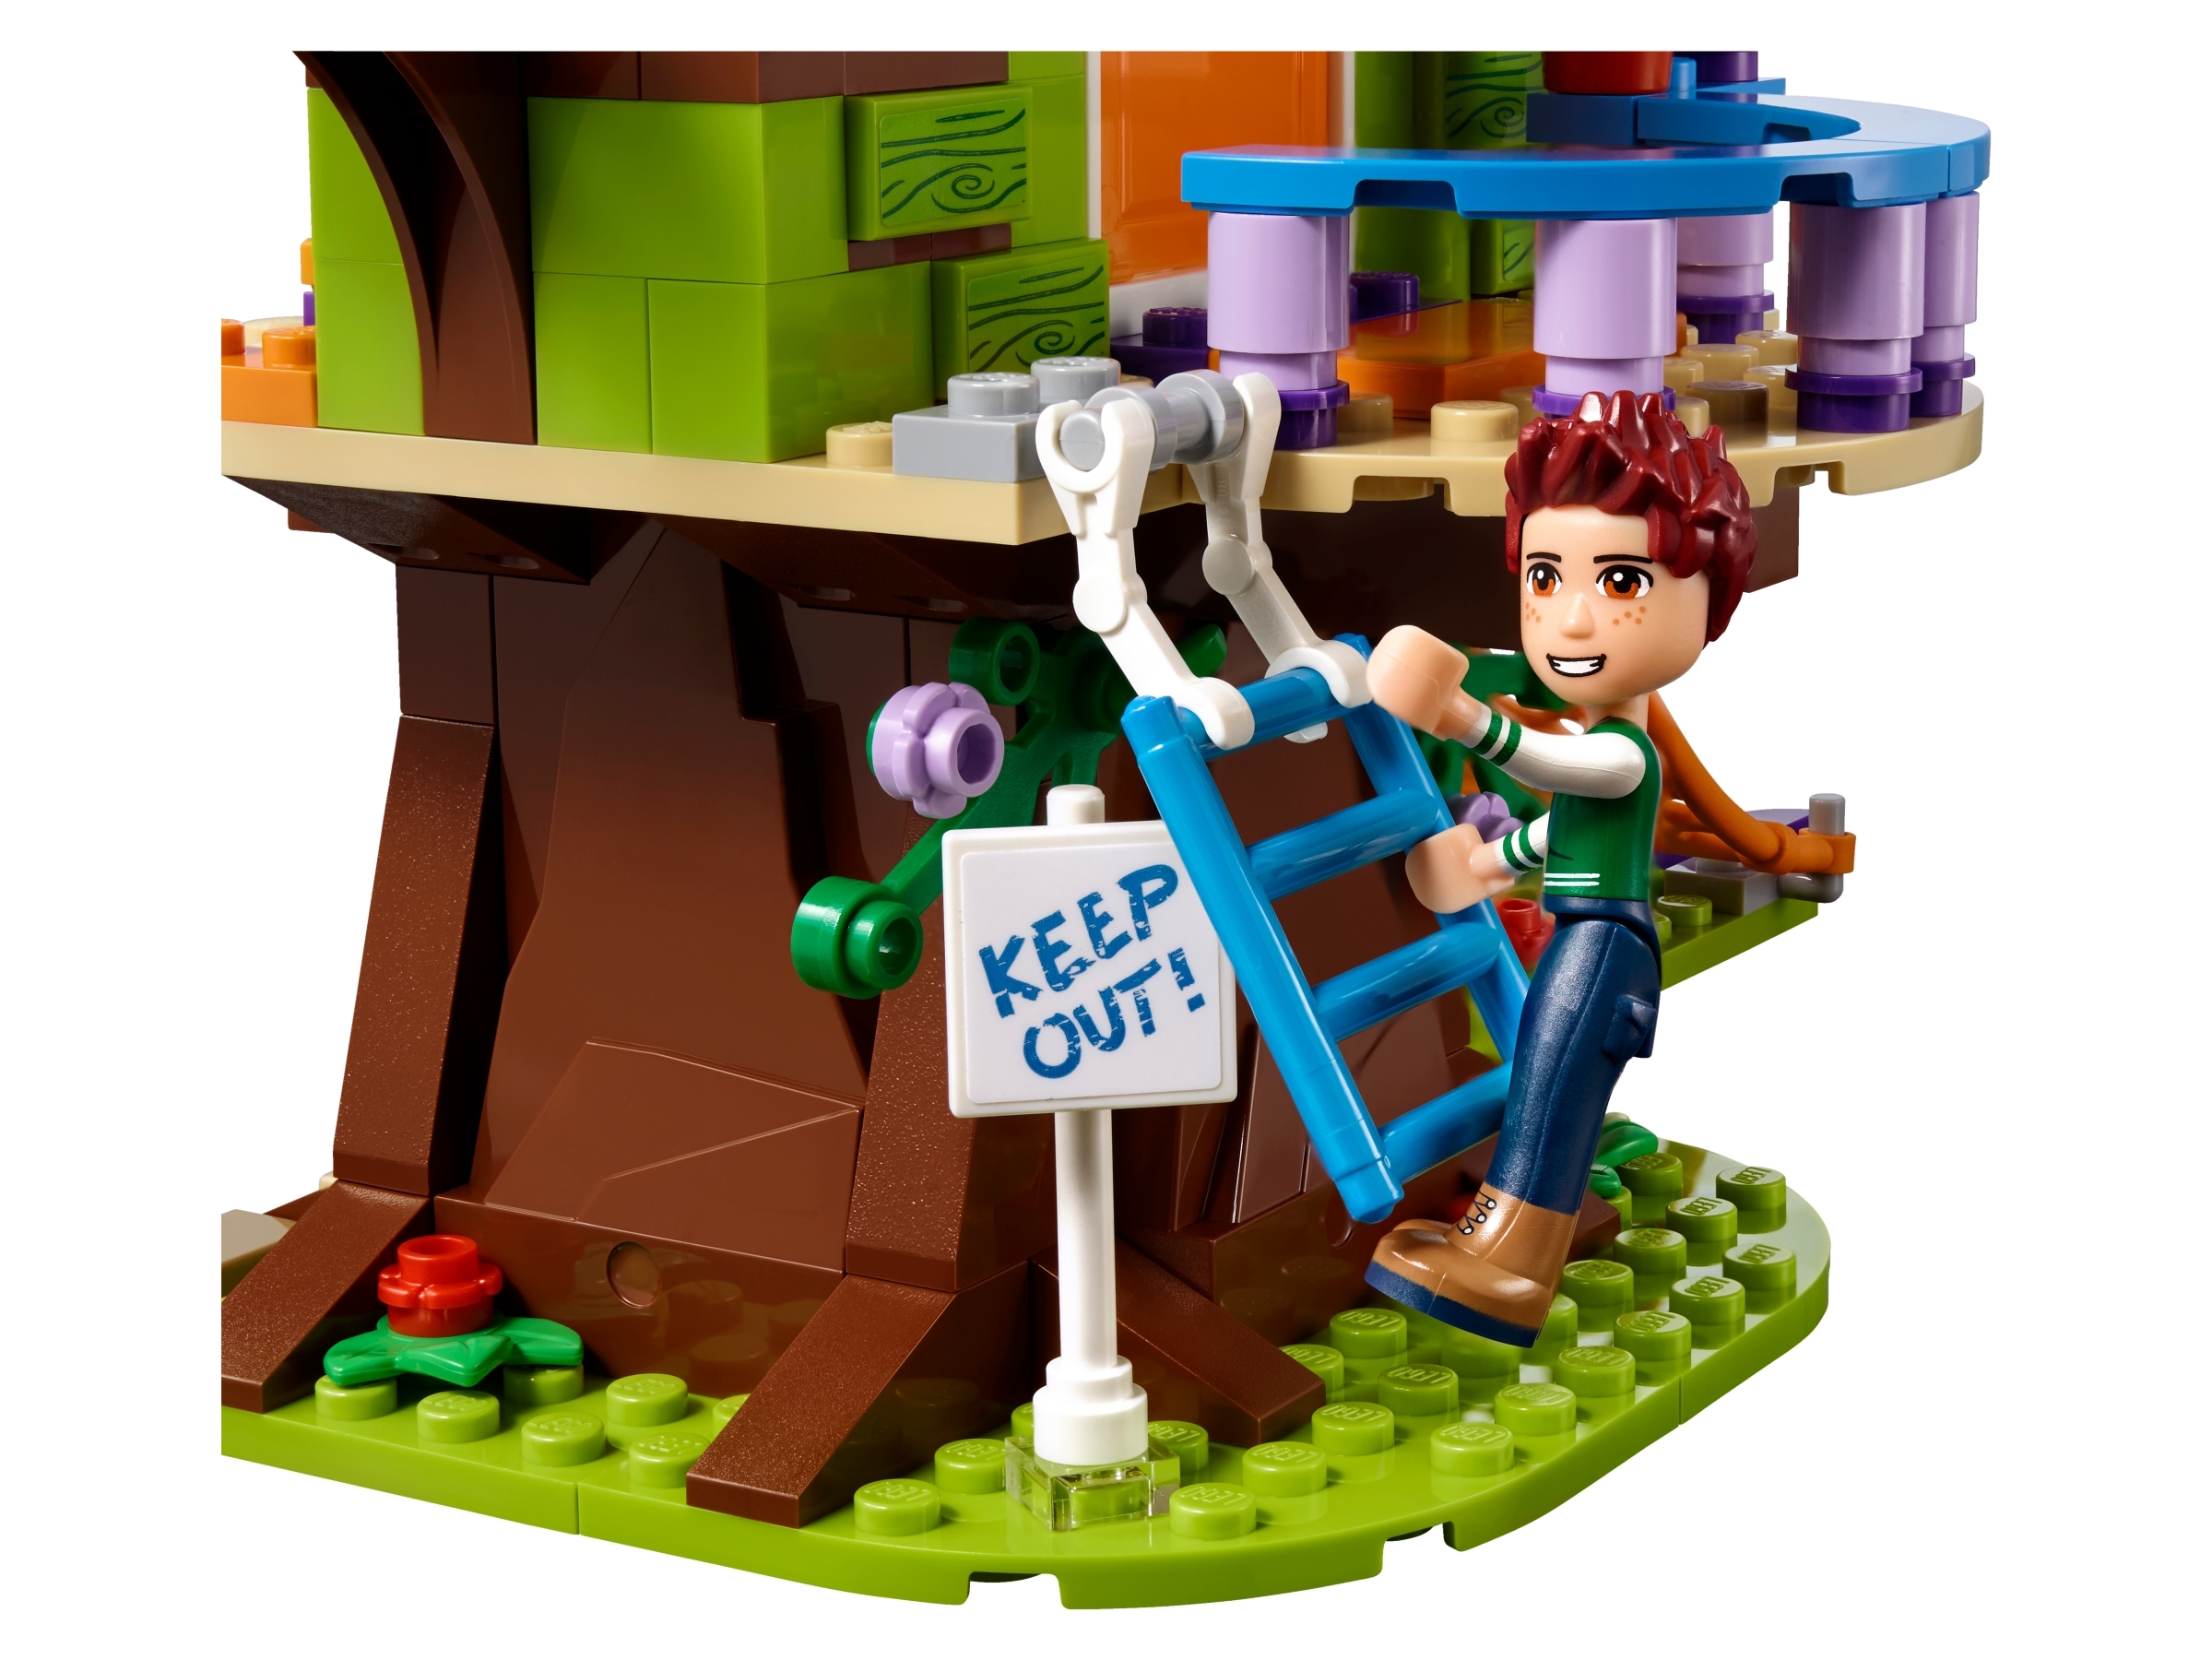 Lego Friends 41335 Mia's Tree House Playset Brand New Free 1st Class Postage UK 